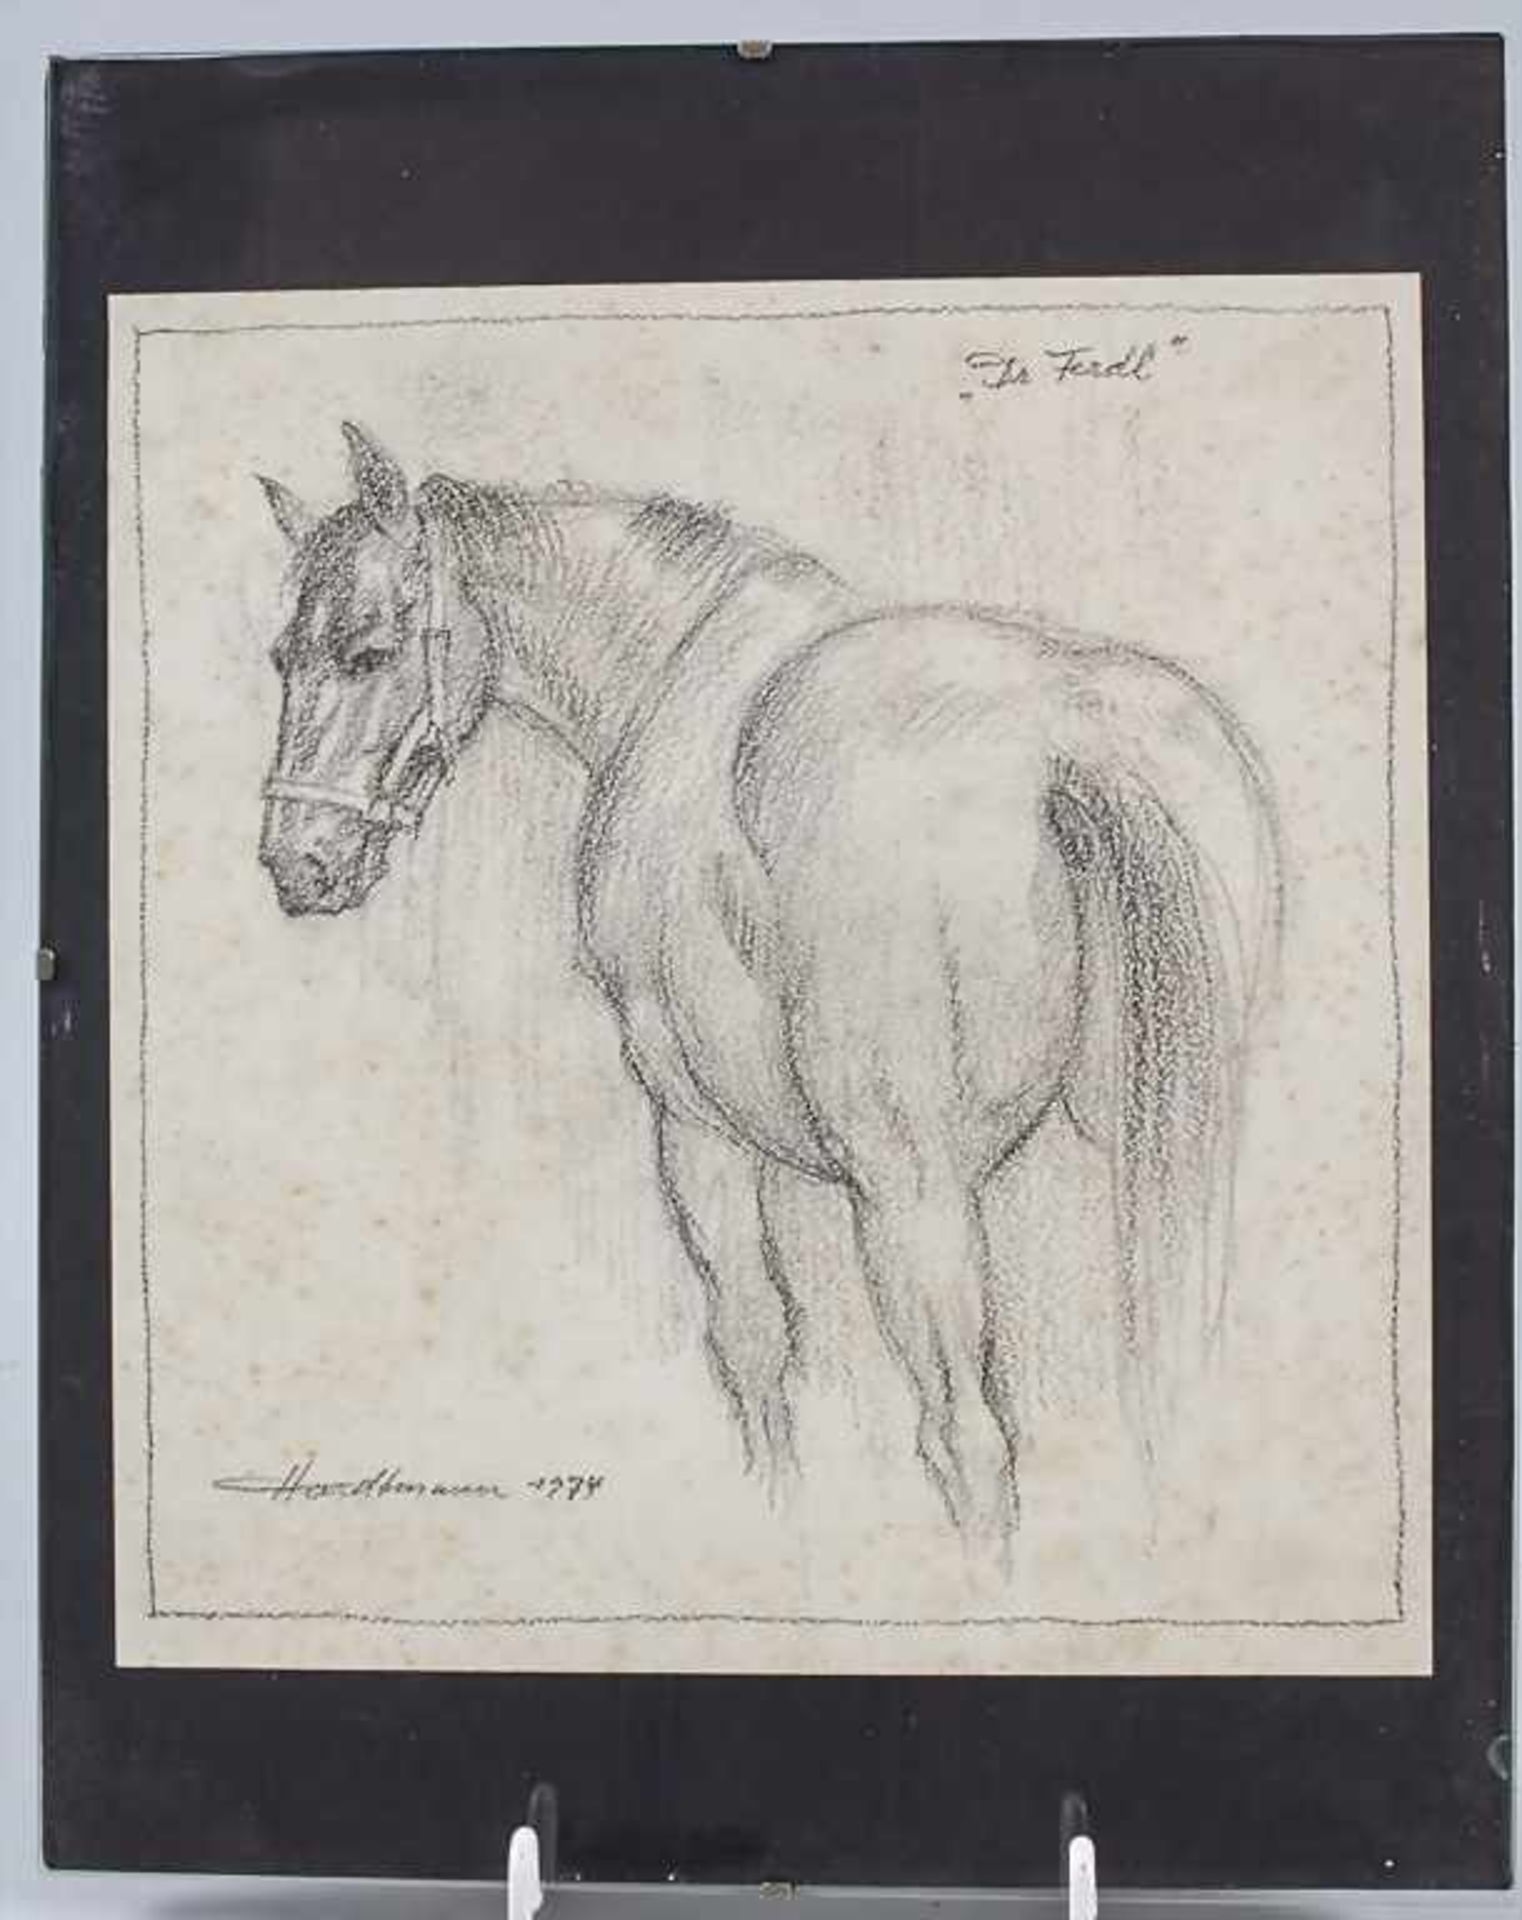 Johann Joseph Hartmann (1753-1830), Pferdeporträt 'Der Ferdl' / A horse portrait 'Ferdl'